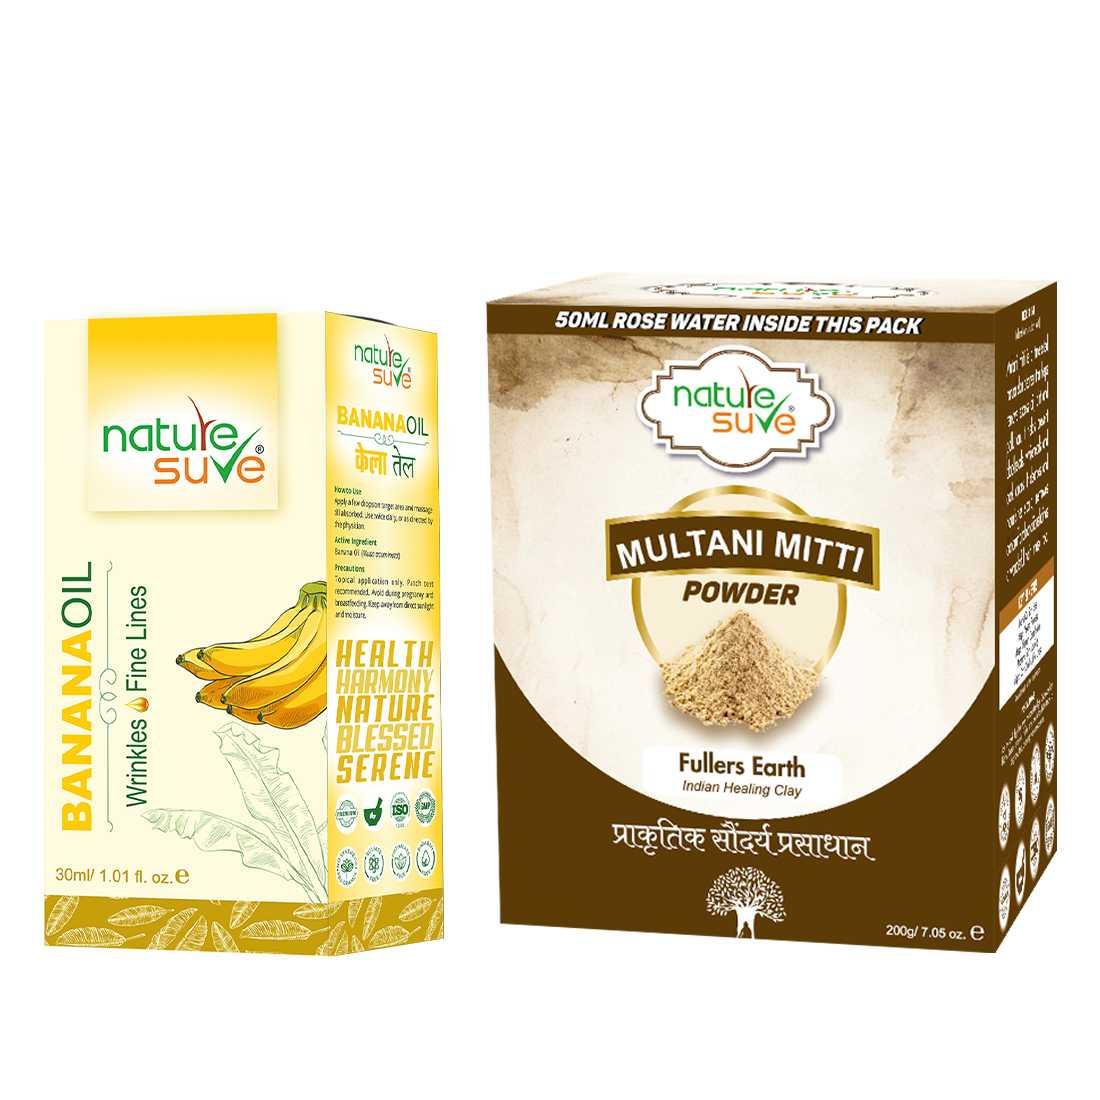 Nature Sure Combo - Banana Oil 30ml and Multani Mitti Powder 200g  - Official Brand Store